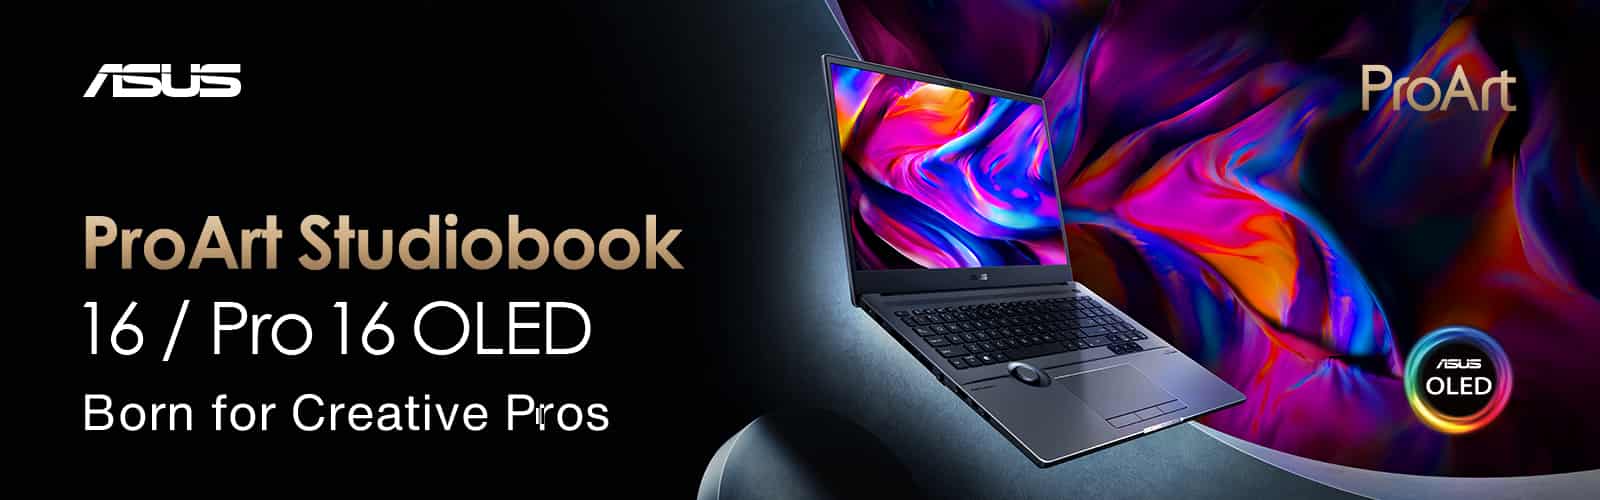 Asus proart studiobook laptop in BD